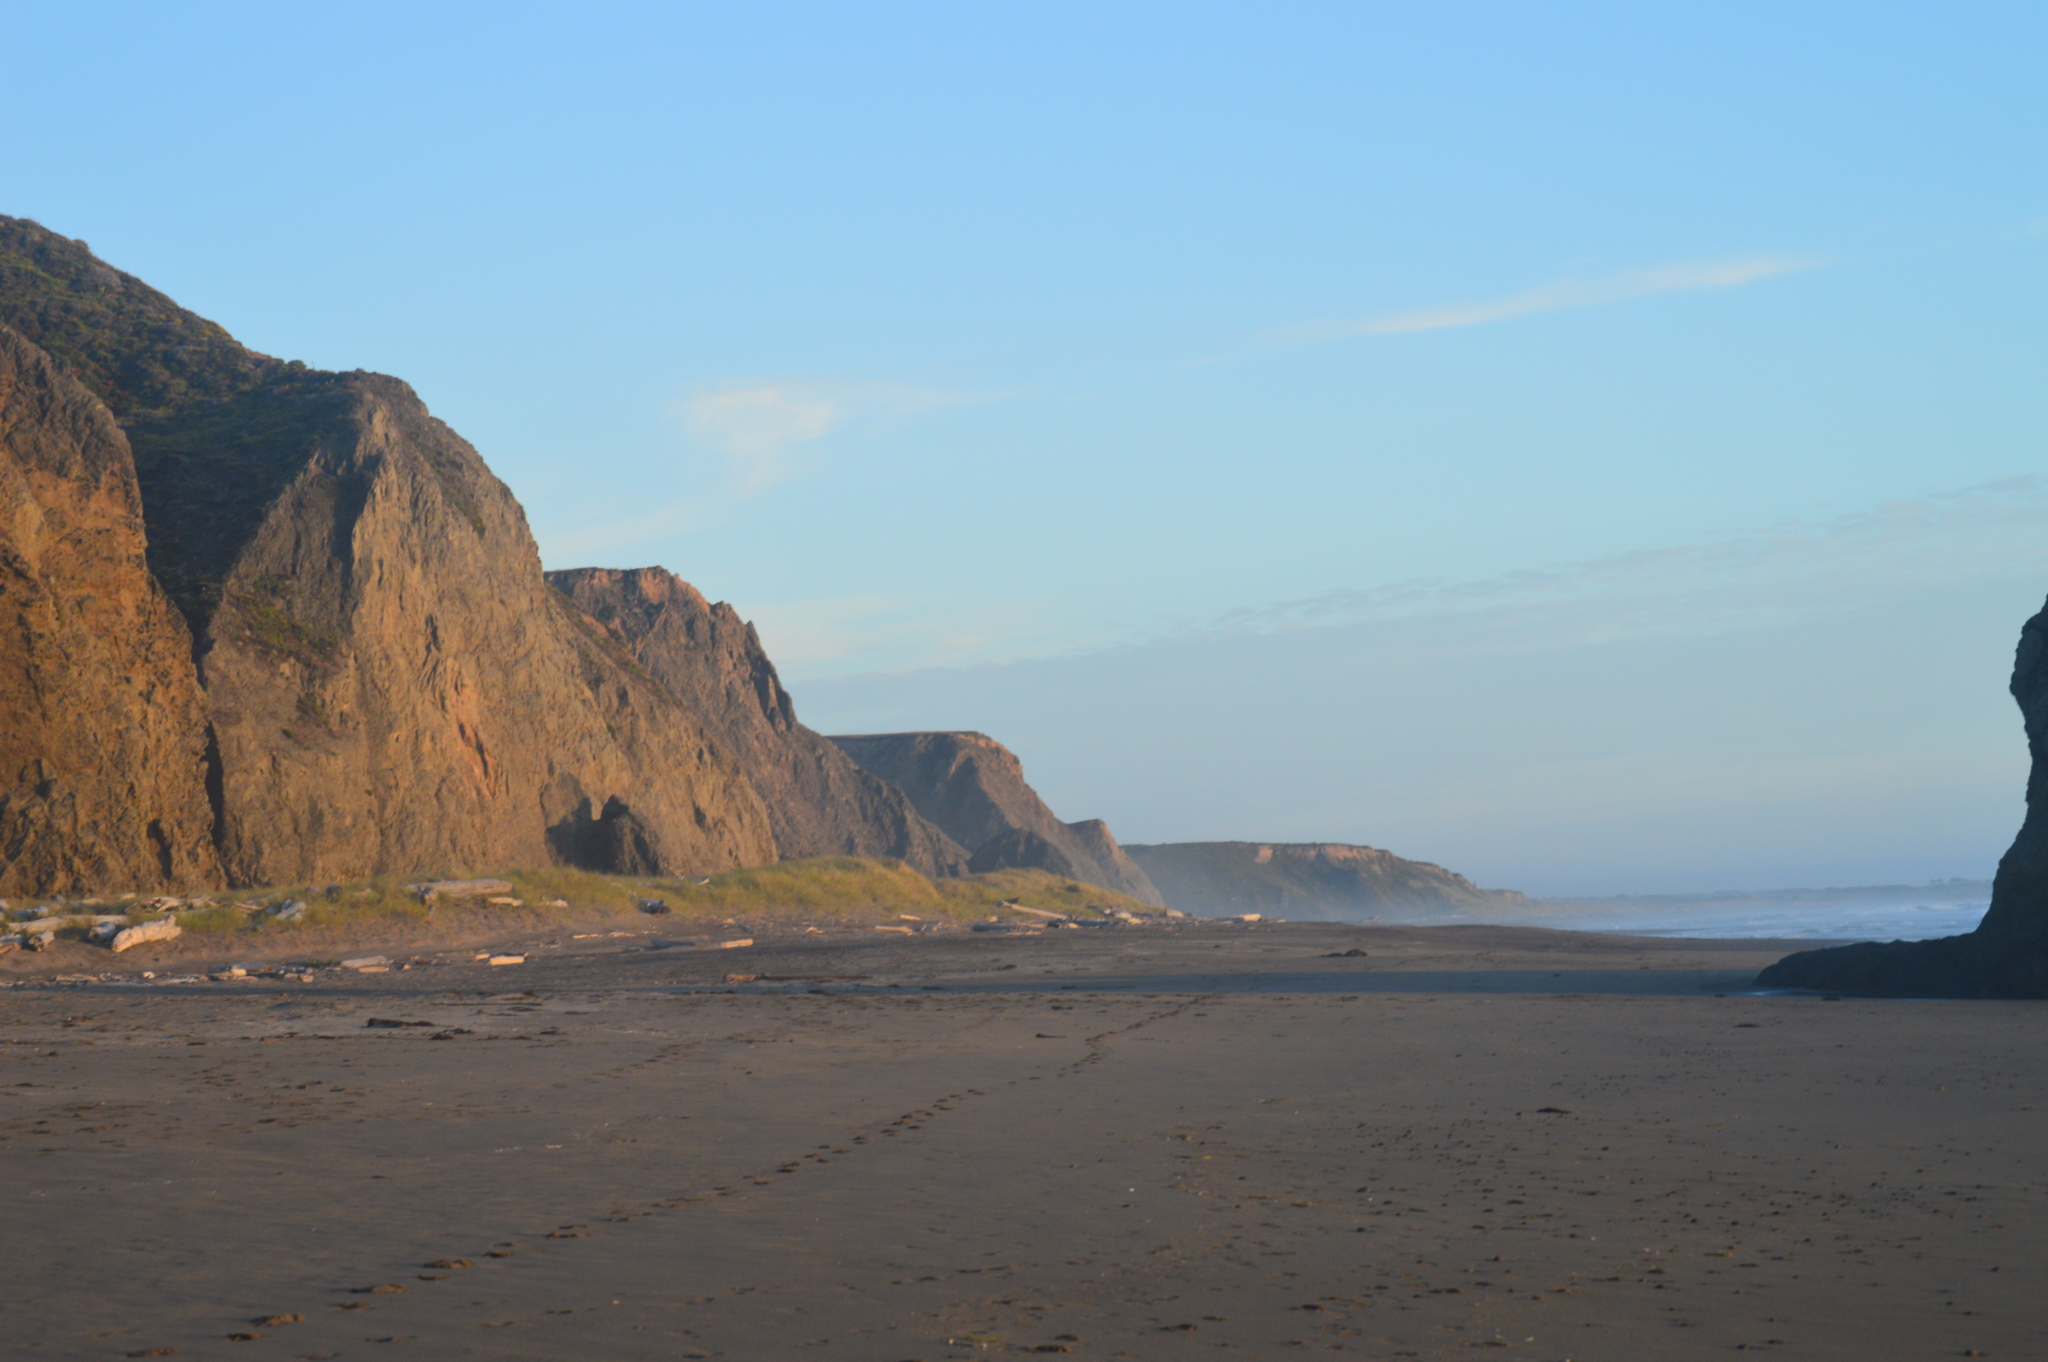 Sandy Northern California beach with rocky cliffs